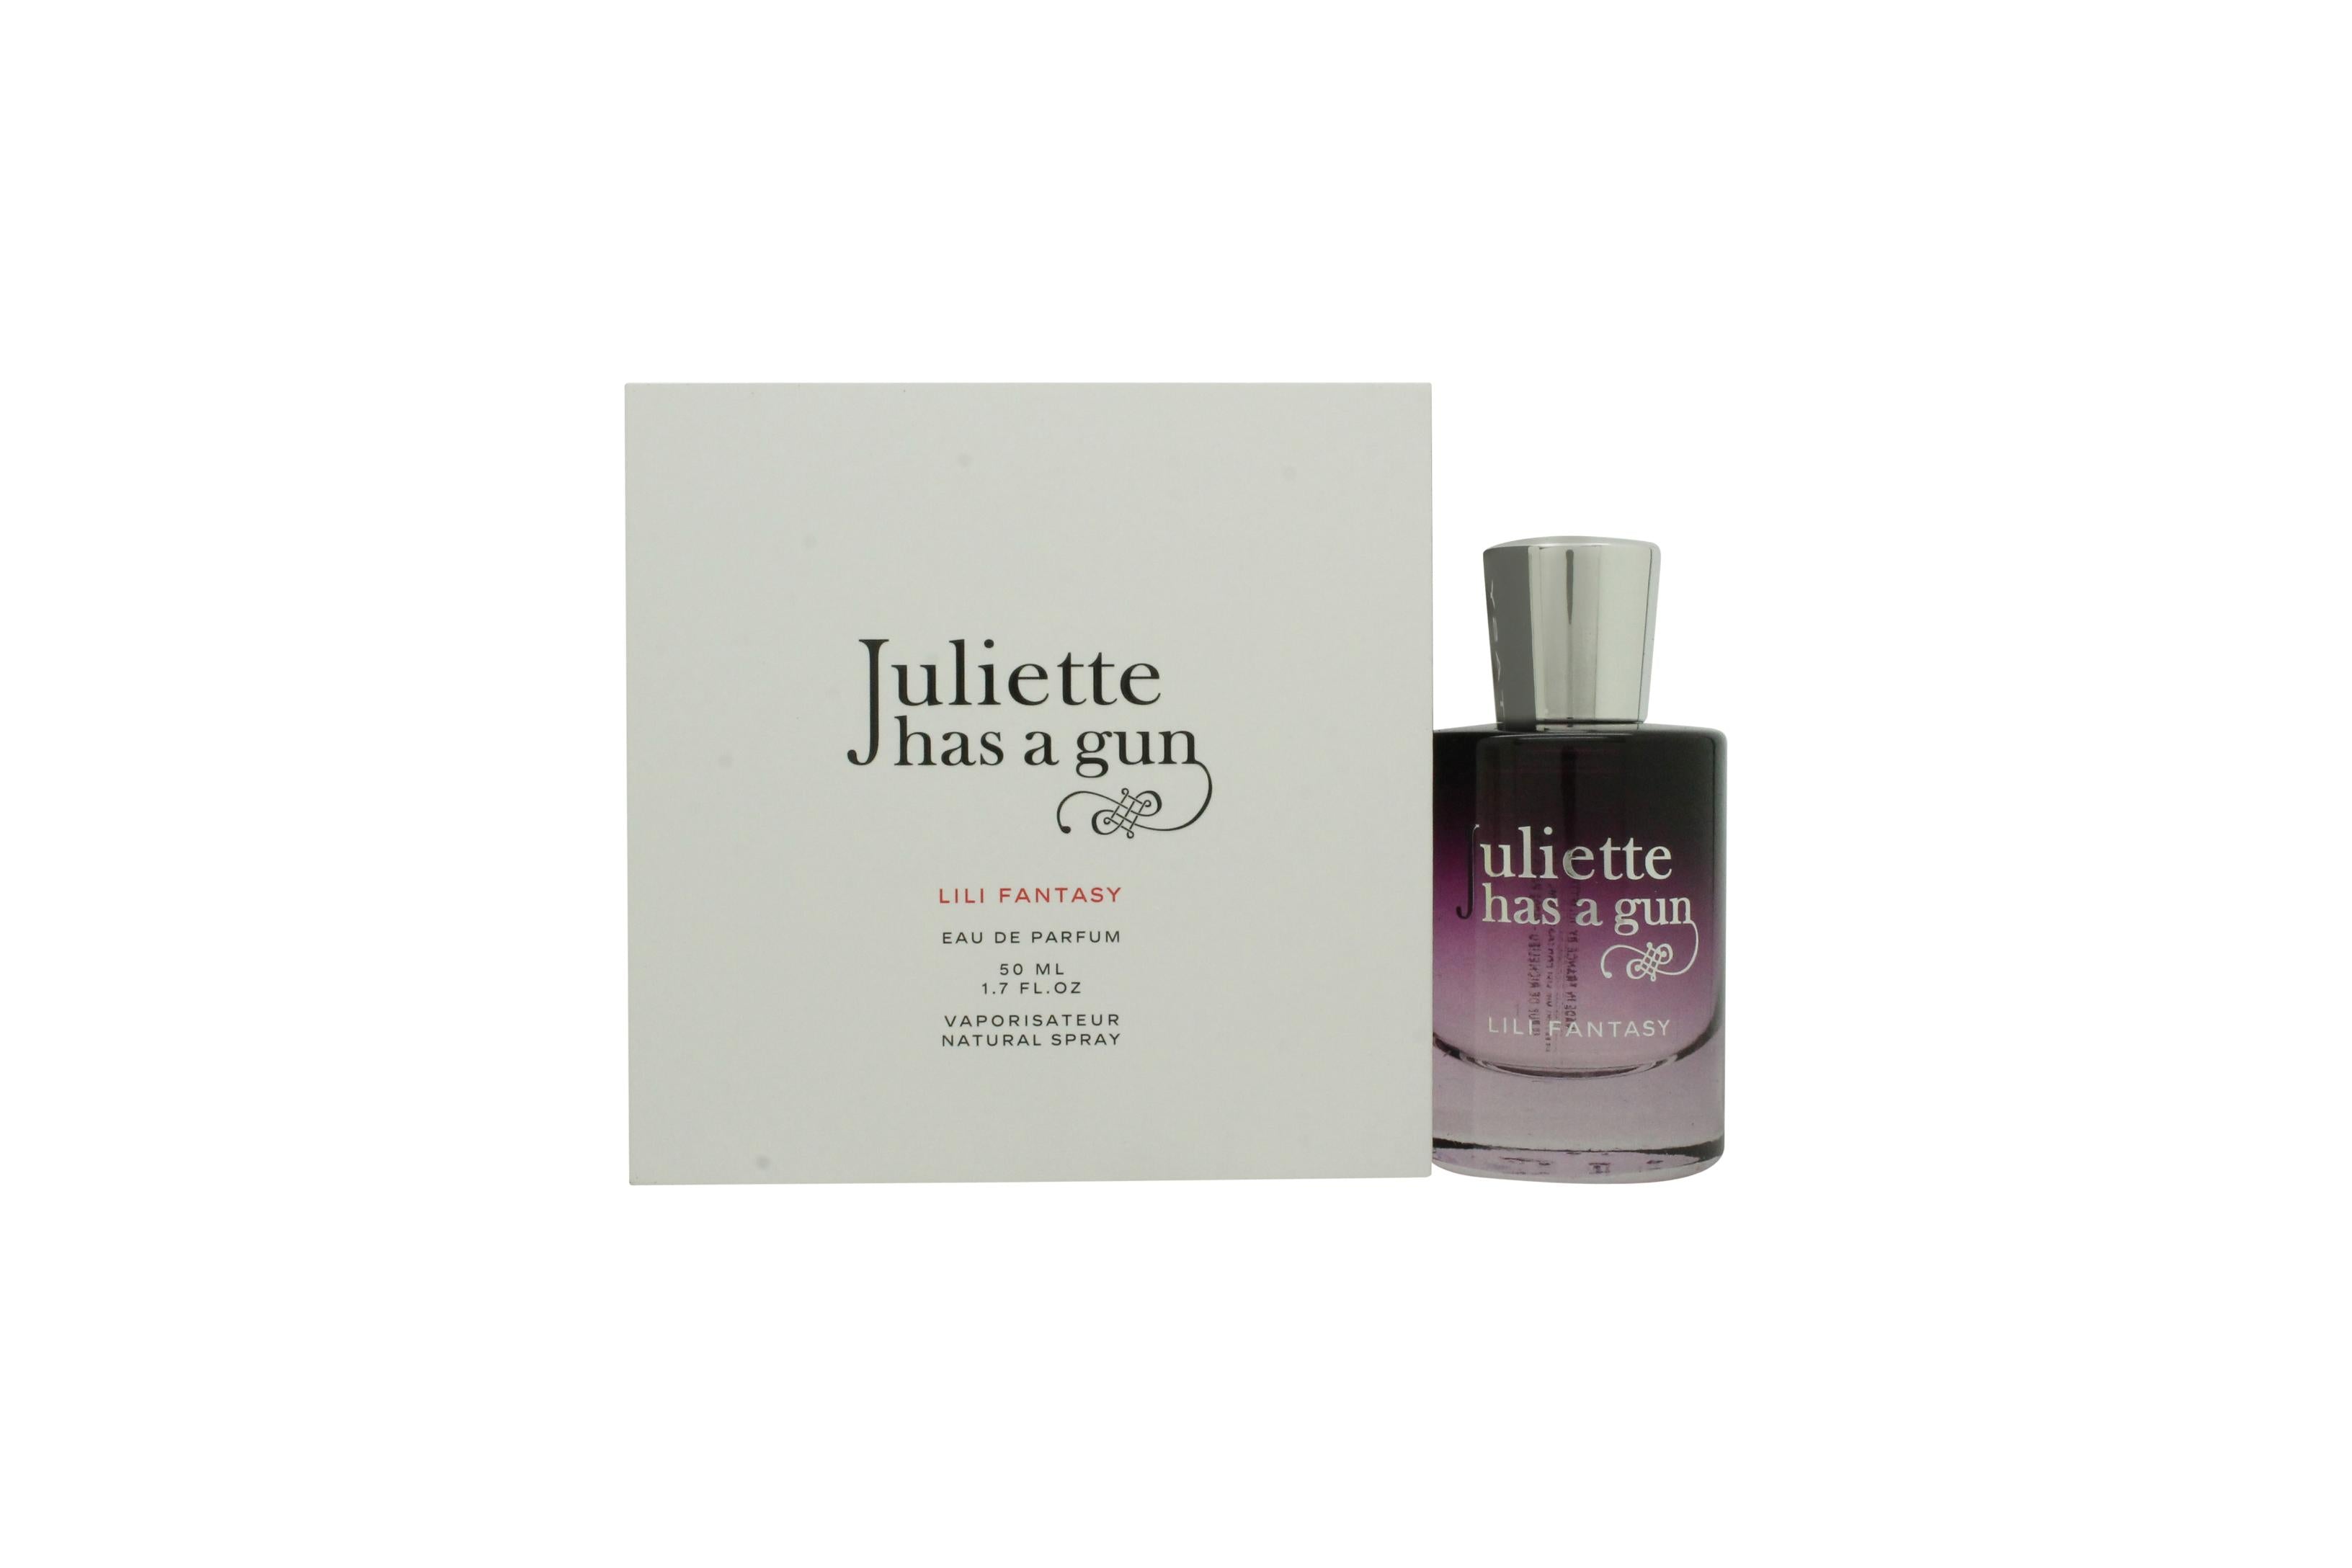 View Juliette Has A Gun Lili Fantasy Eau de Parfum 50ml Spray information